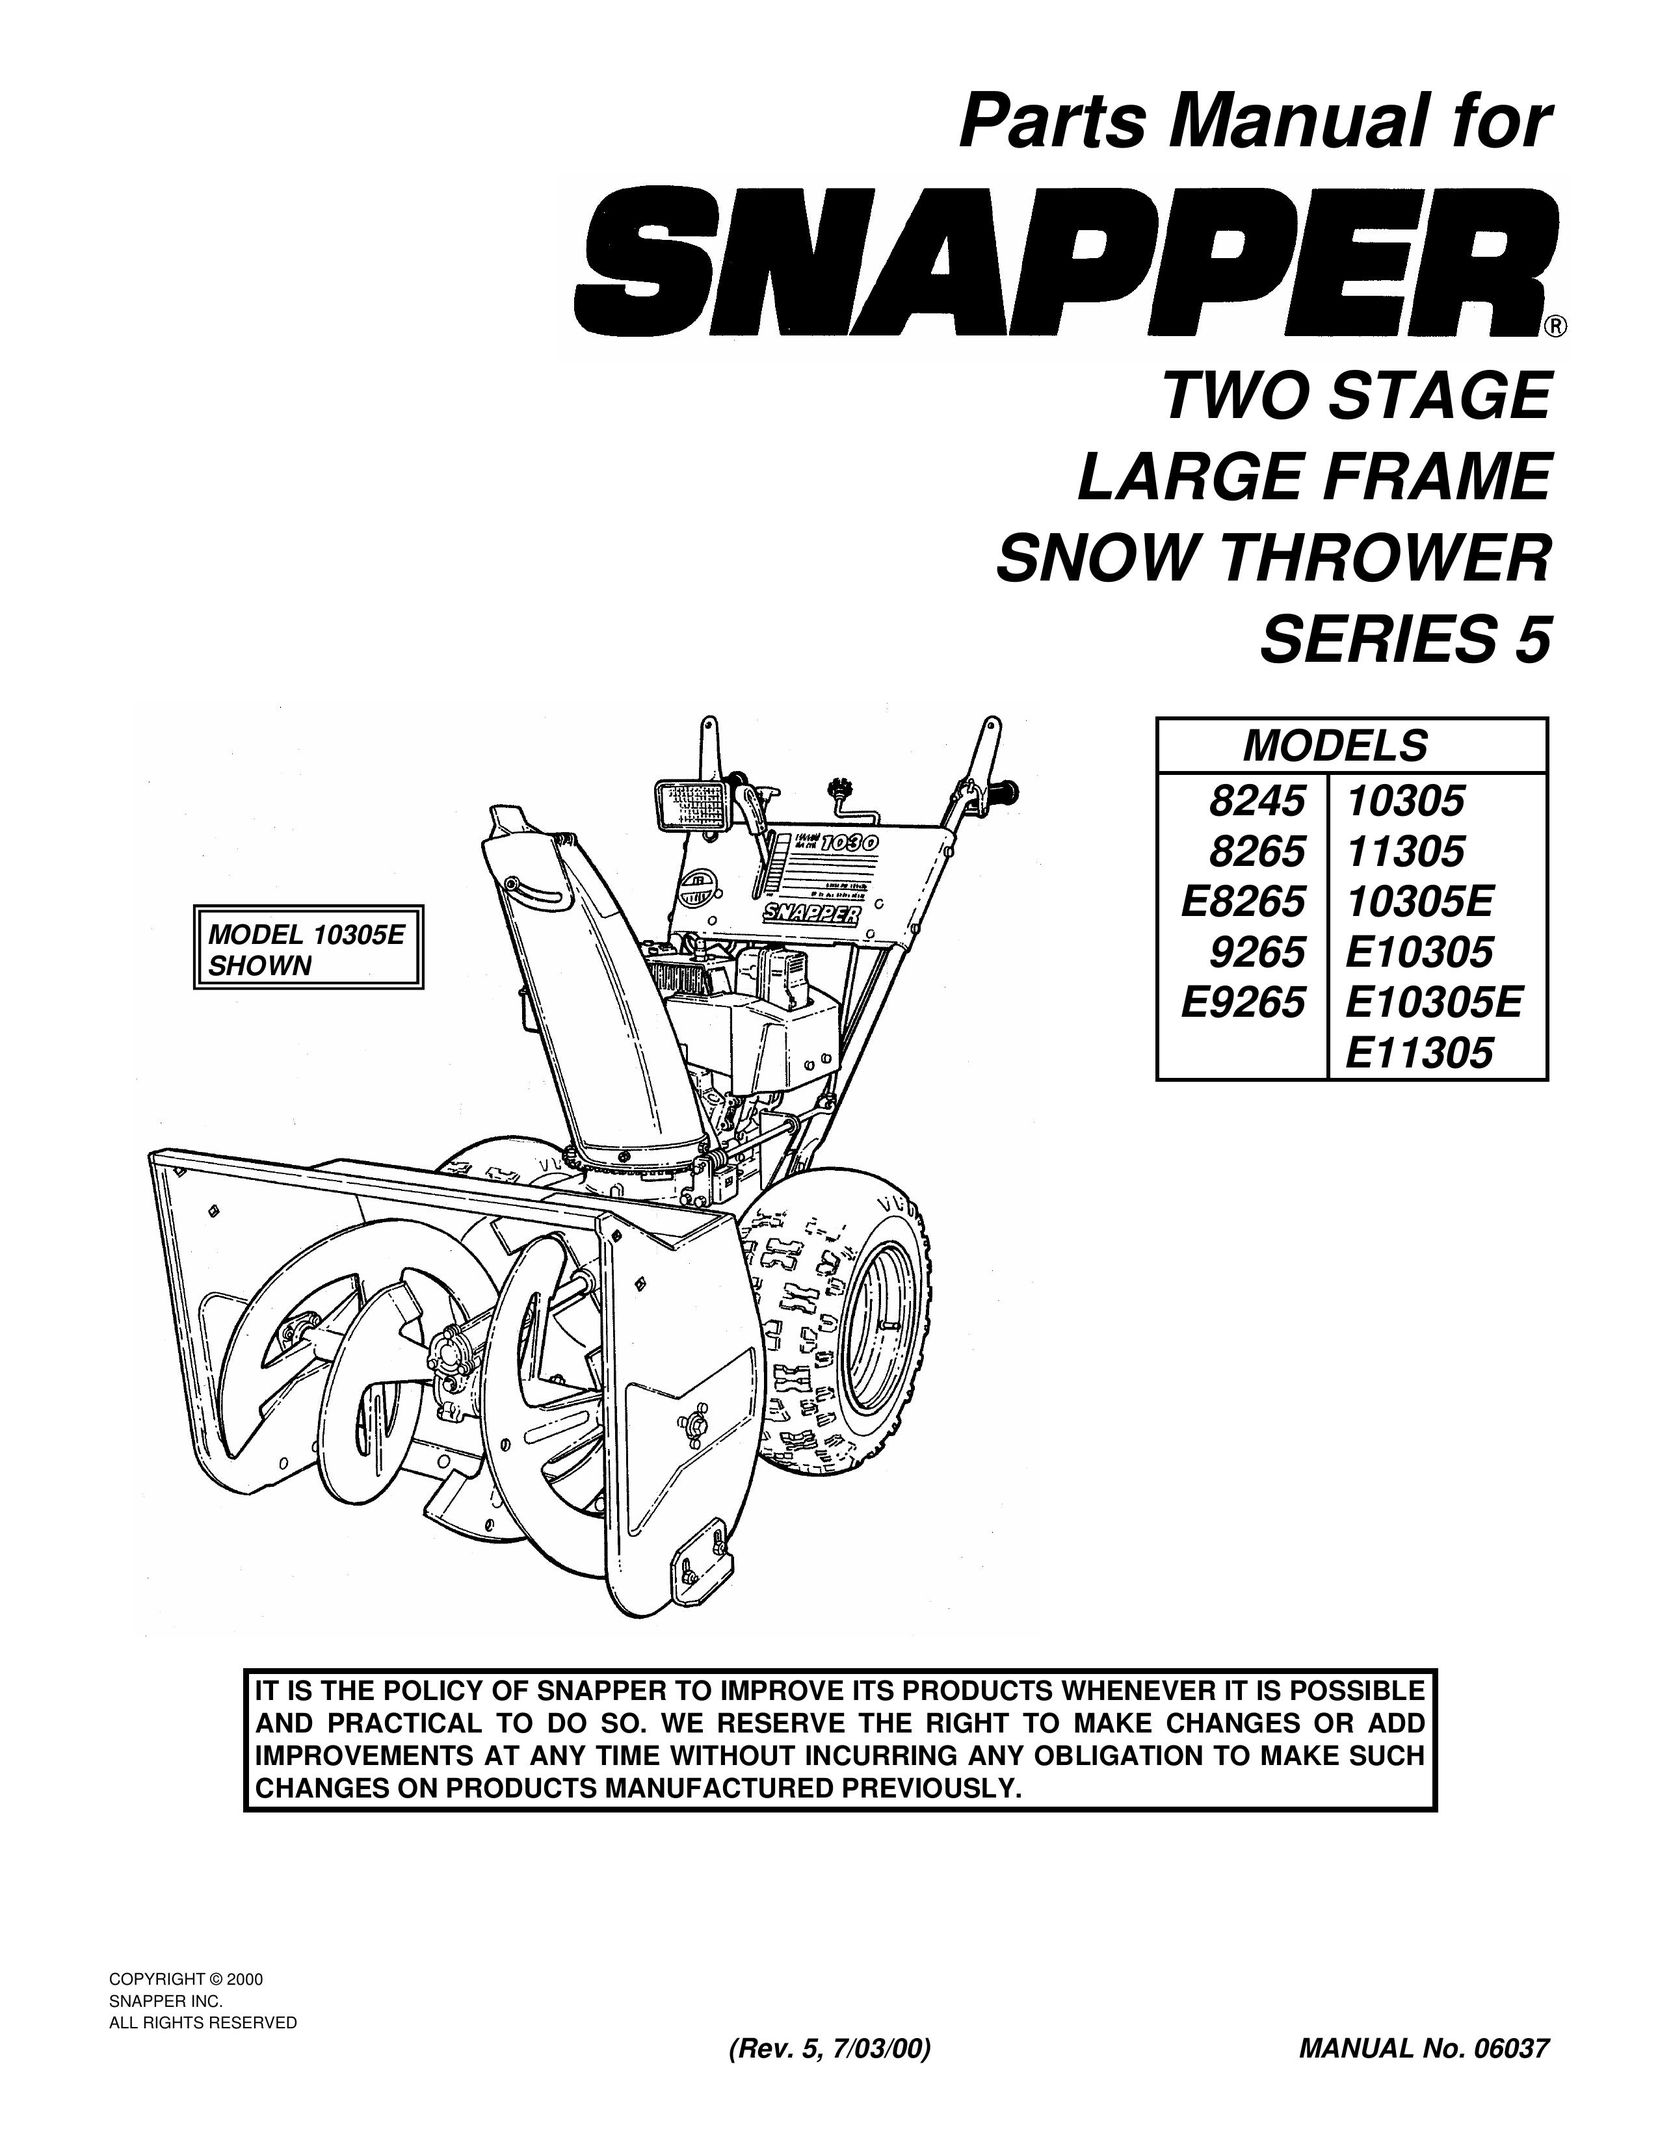 Snapper 8265 VCR User Manual